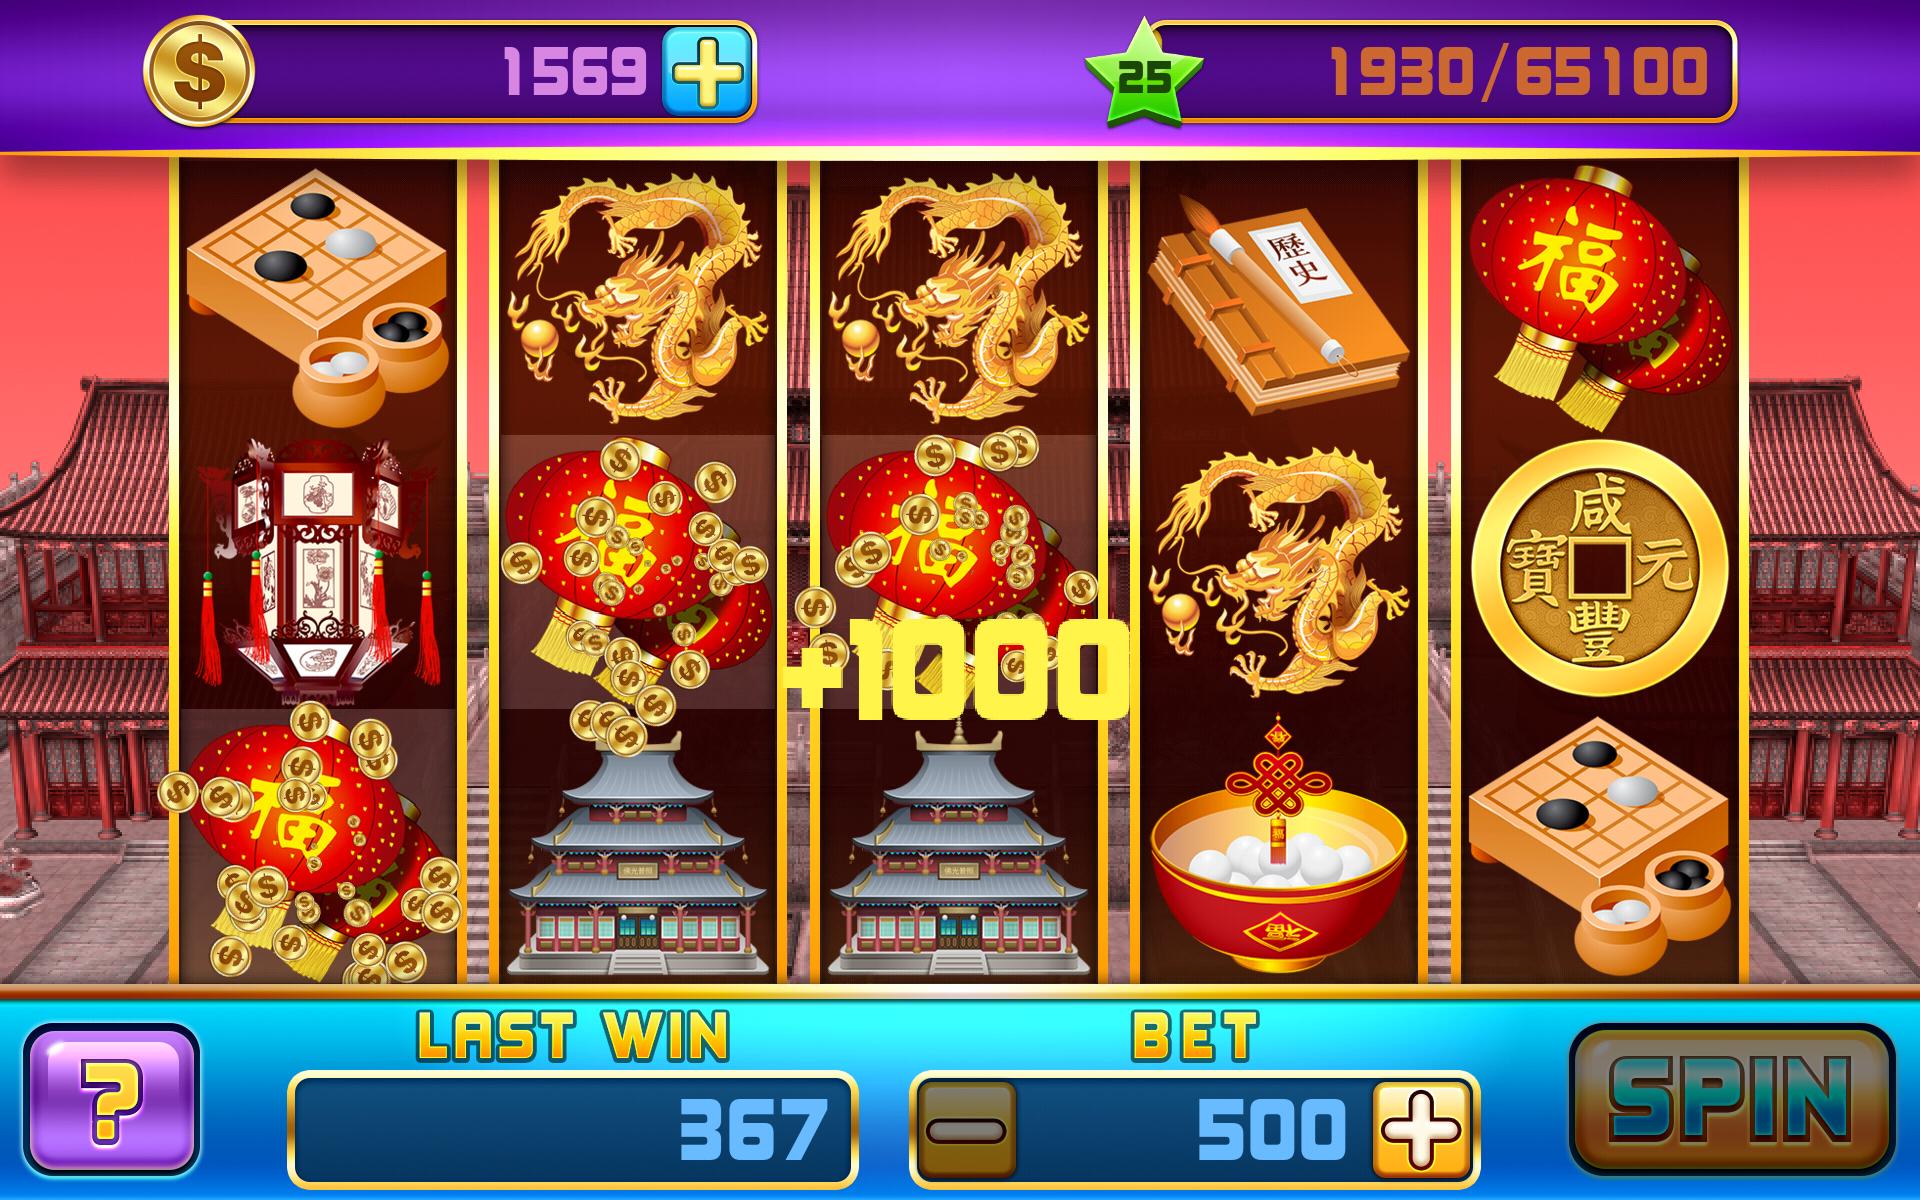 Free online casino slot machine games with bonus rounds рулетка европейская онлайн бесплатно